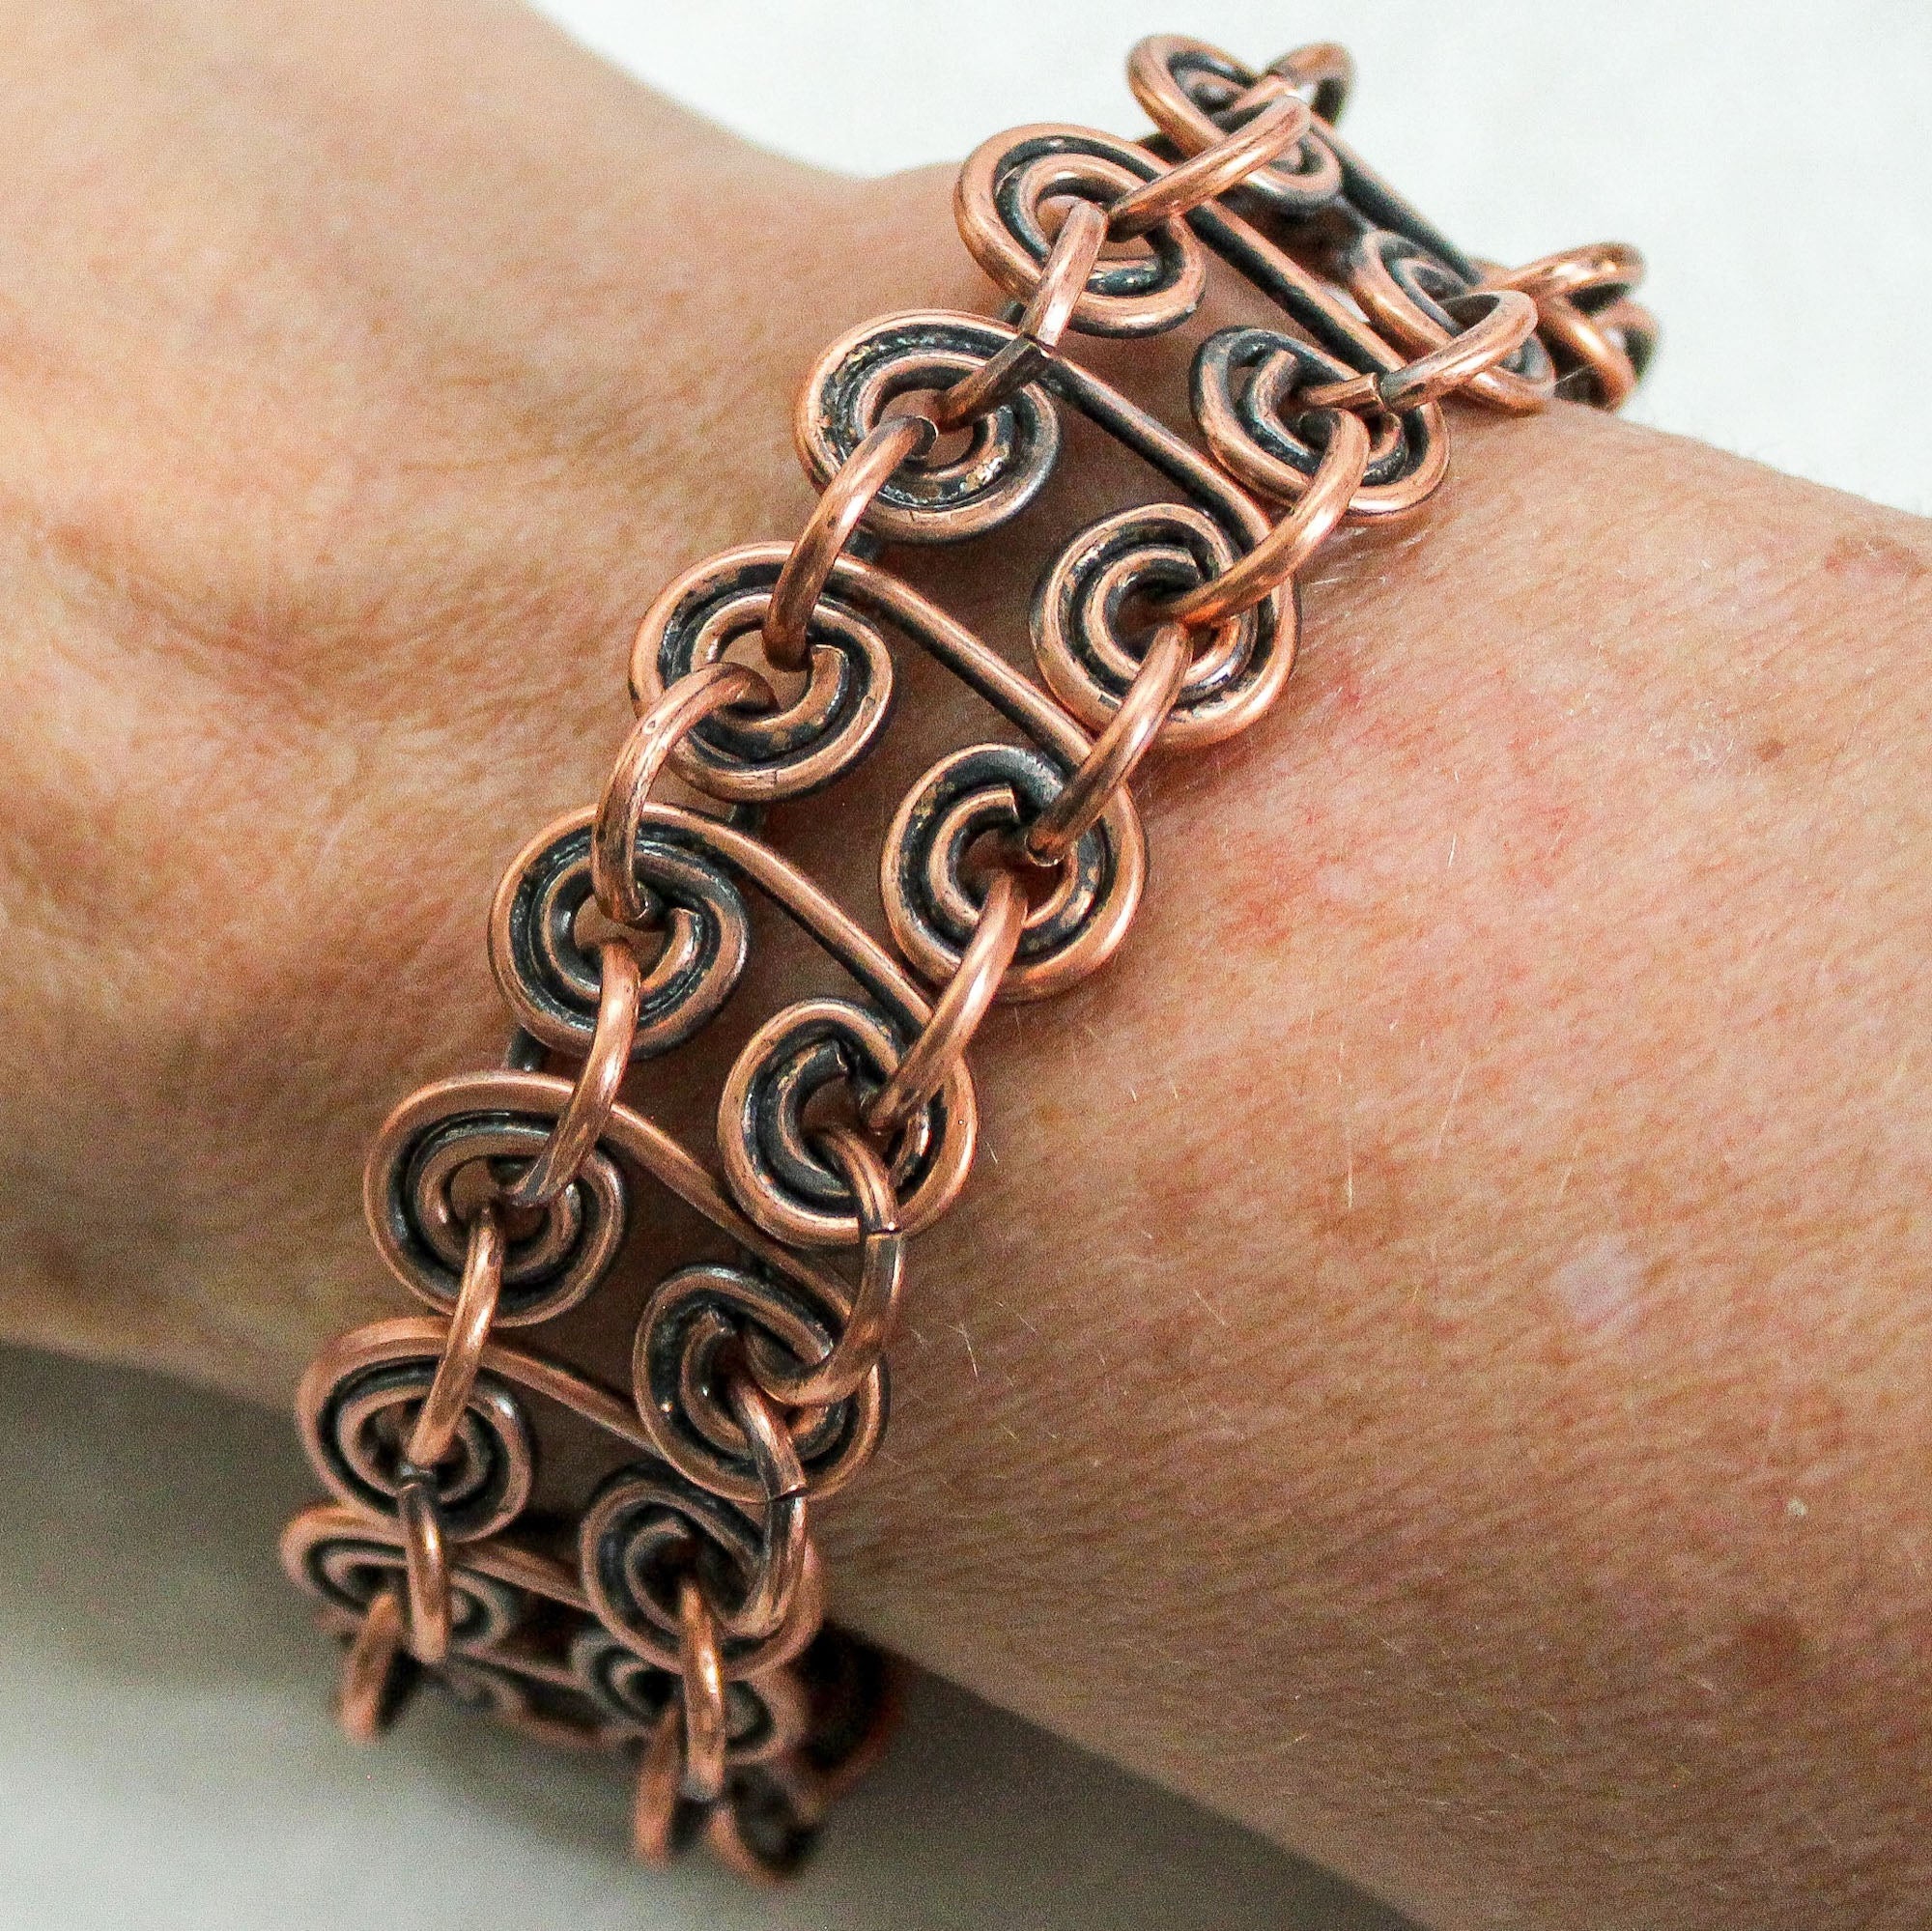 Details more than 153 copper chain link bracelet super hot